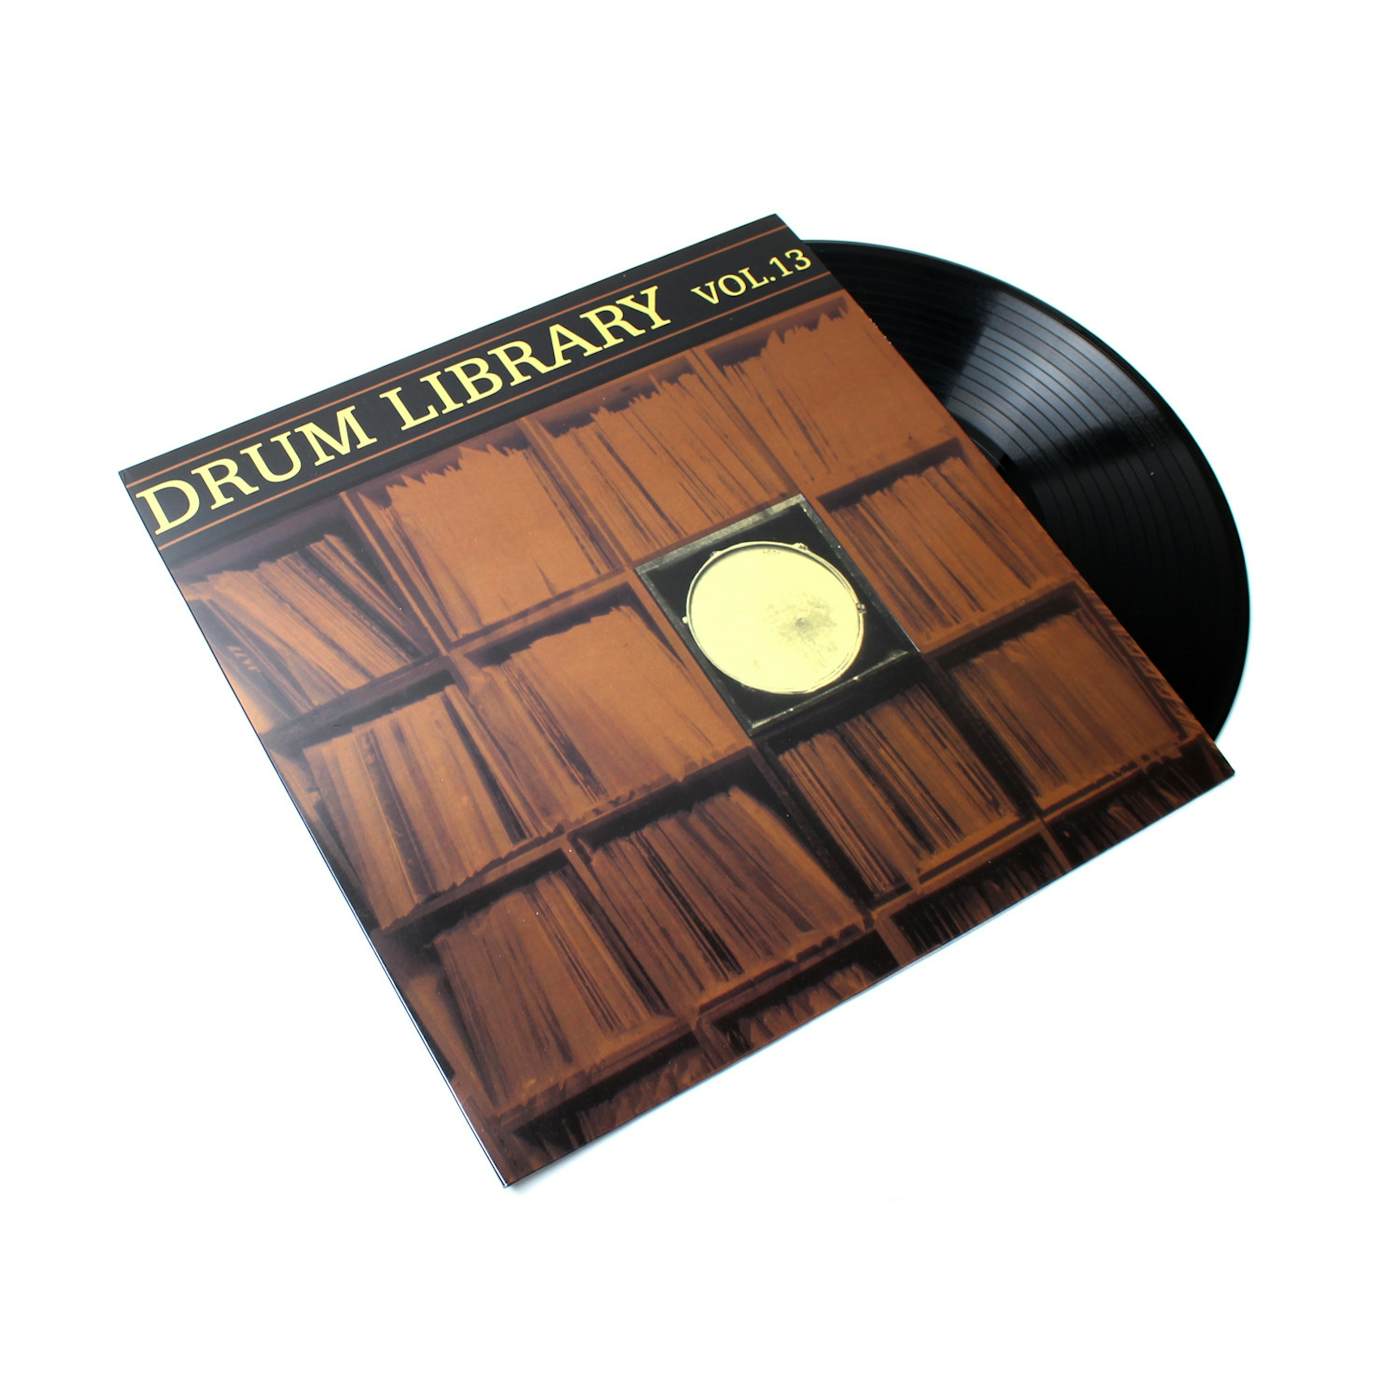 Paul Nice DRUM LIBRARY 13 Vinyl Record